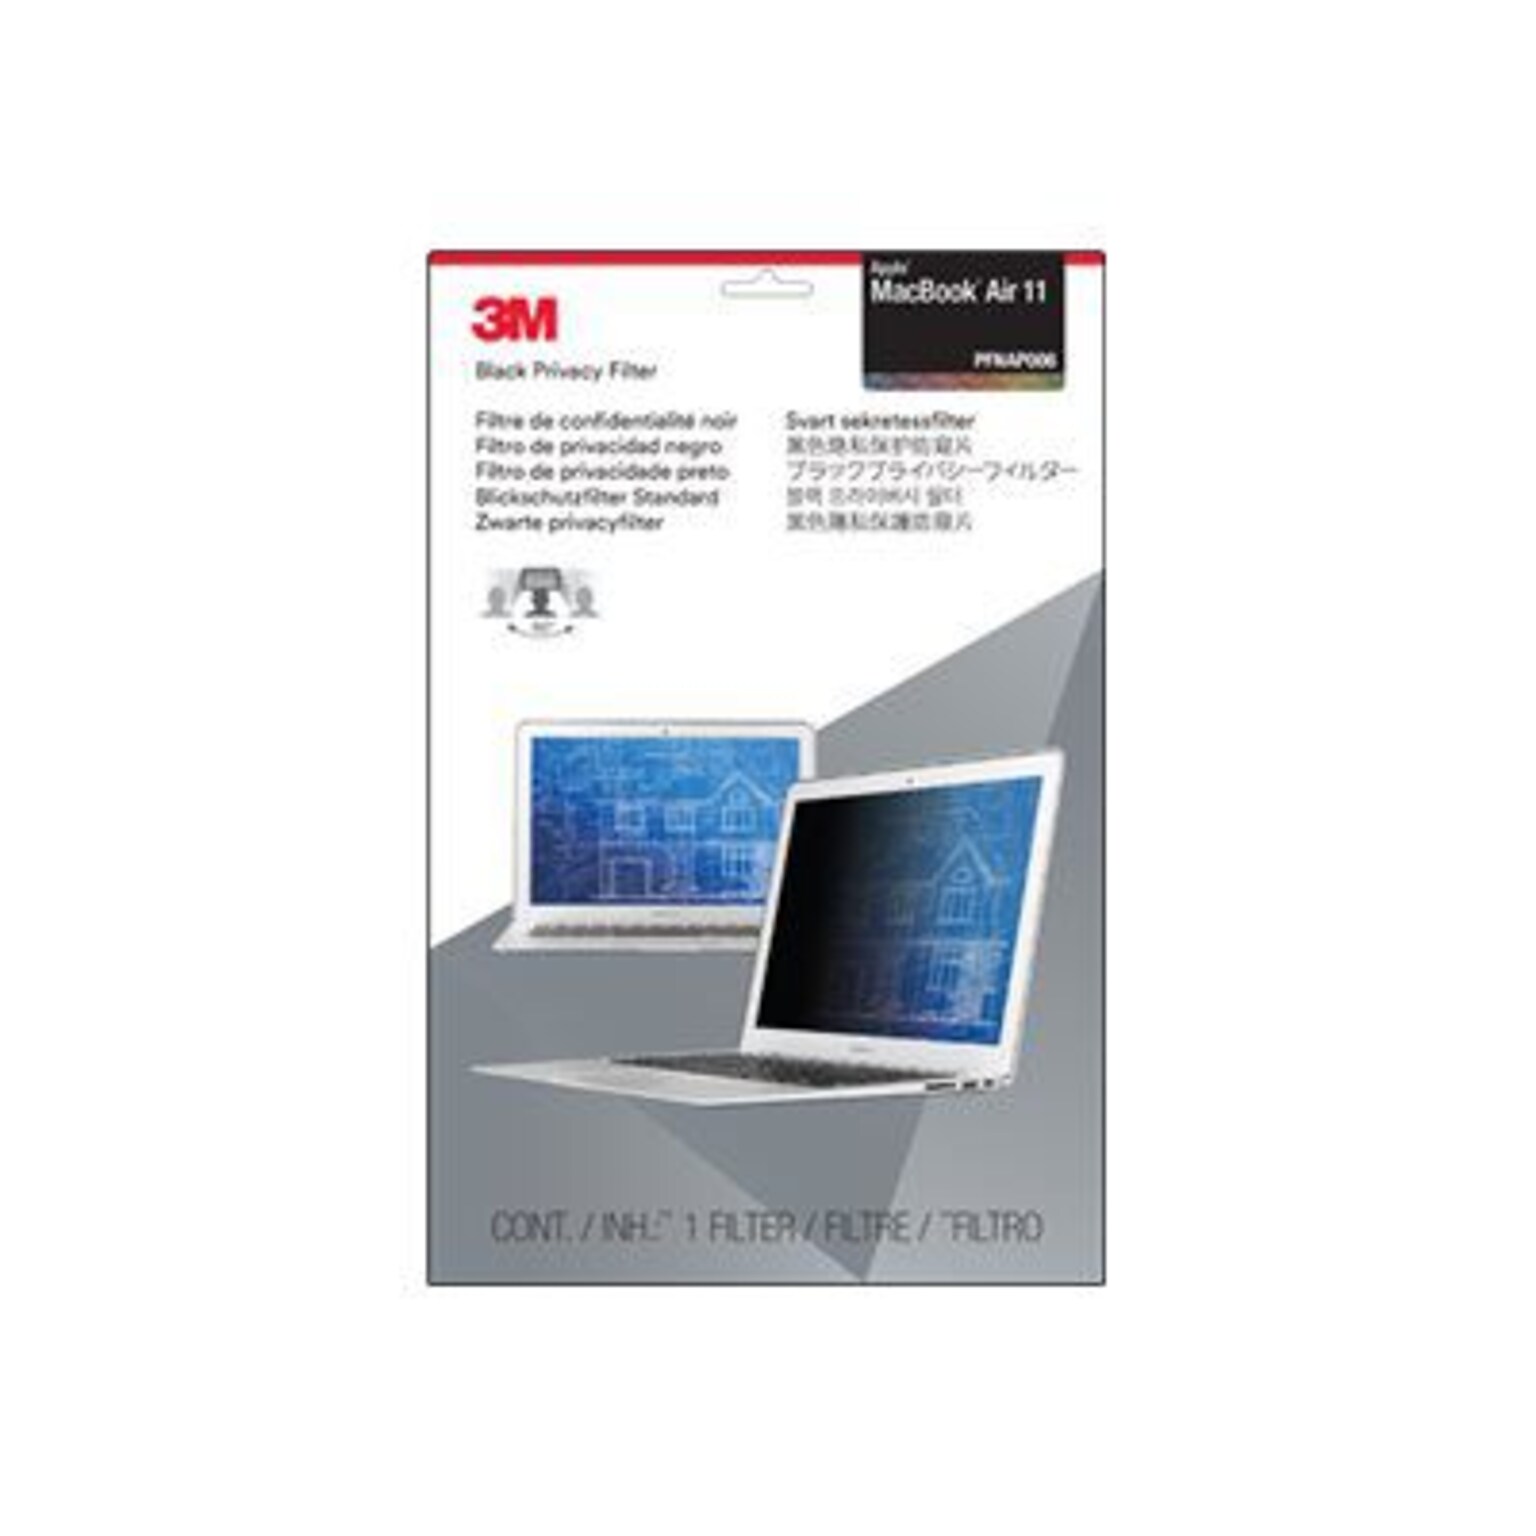 3M™ PFNAP006 11.6 Frameless Privacy Screen Filter, 16:9, Widescreen, LCD